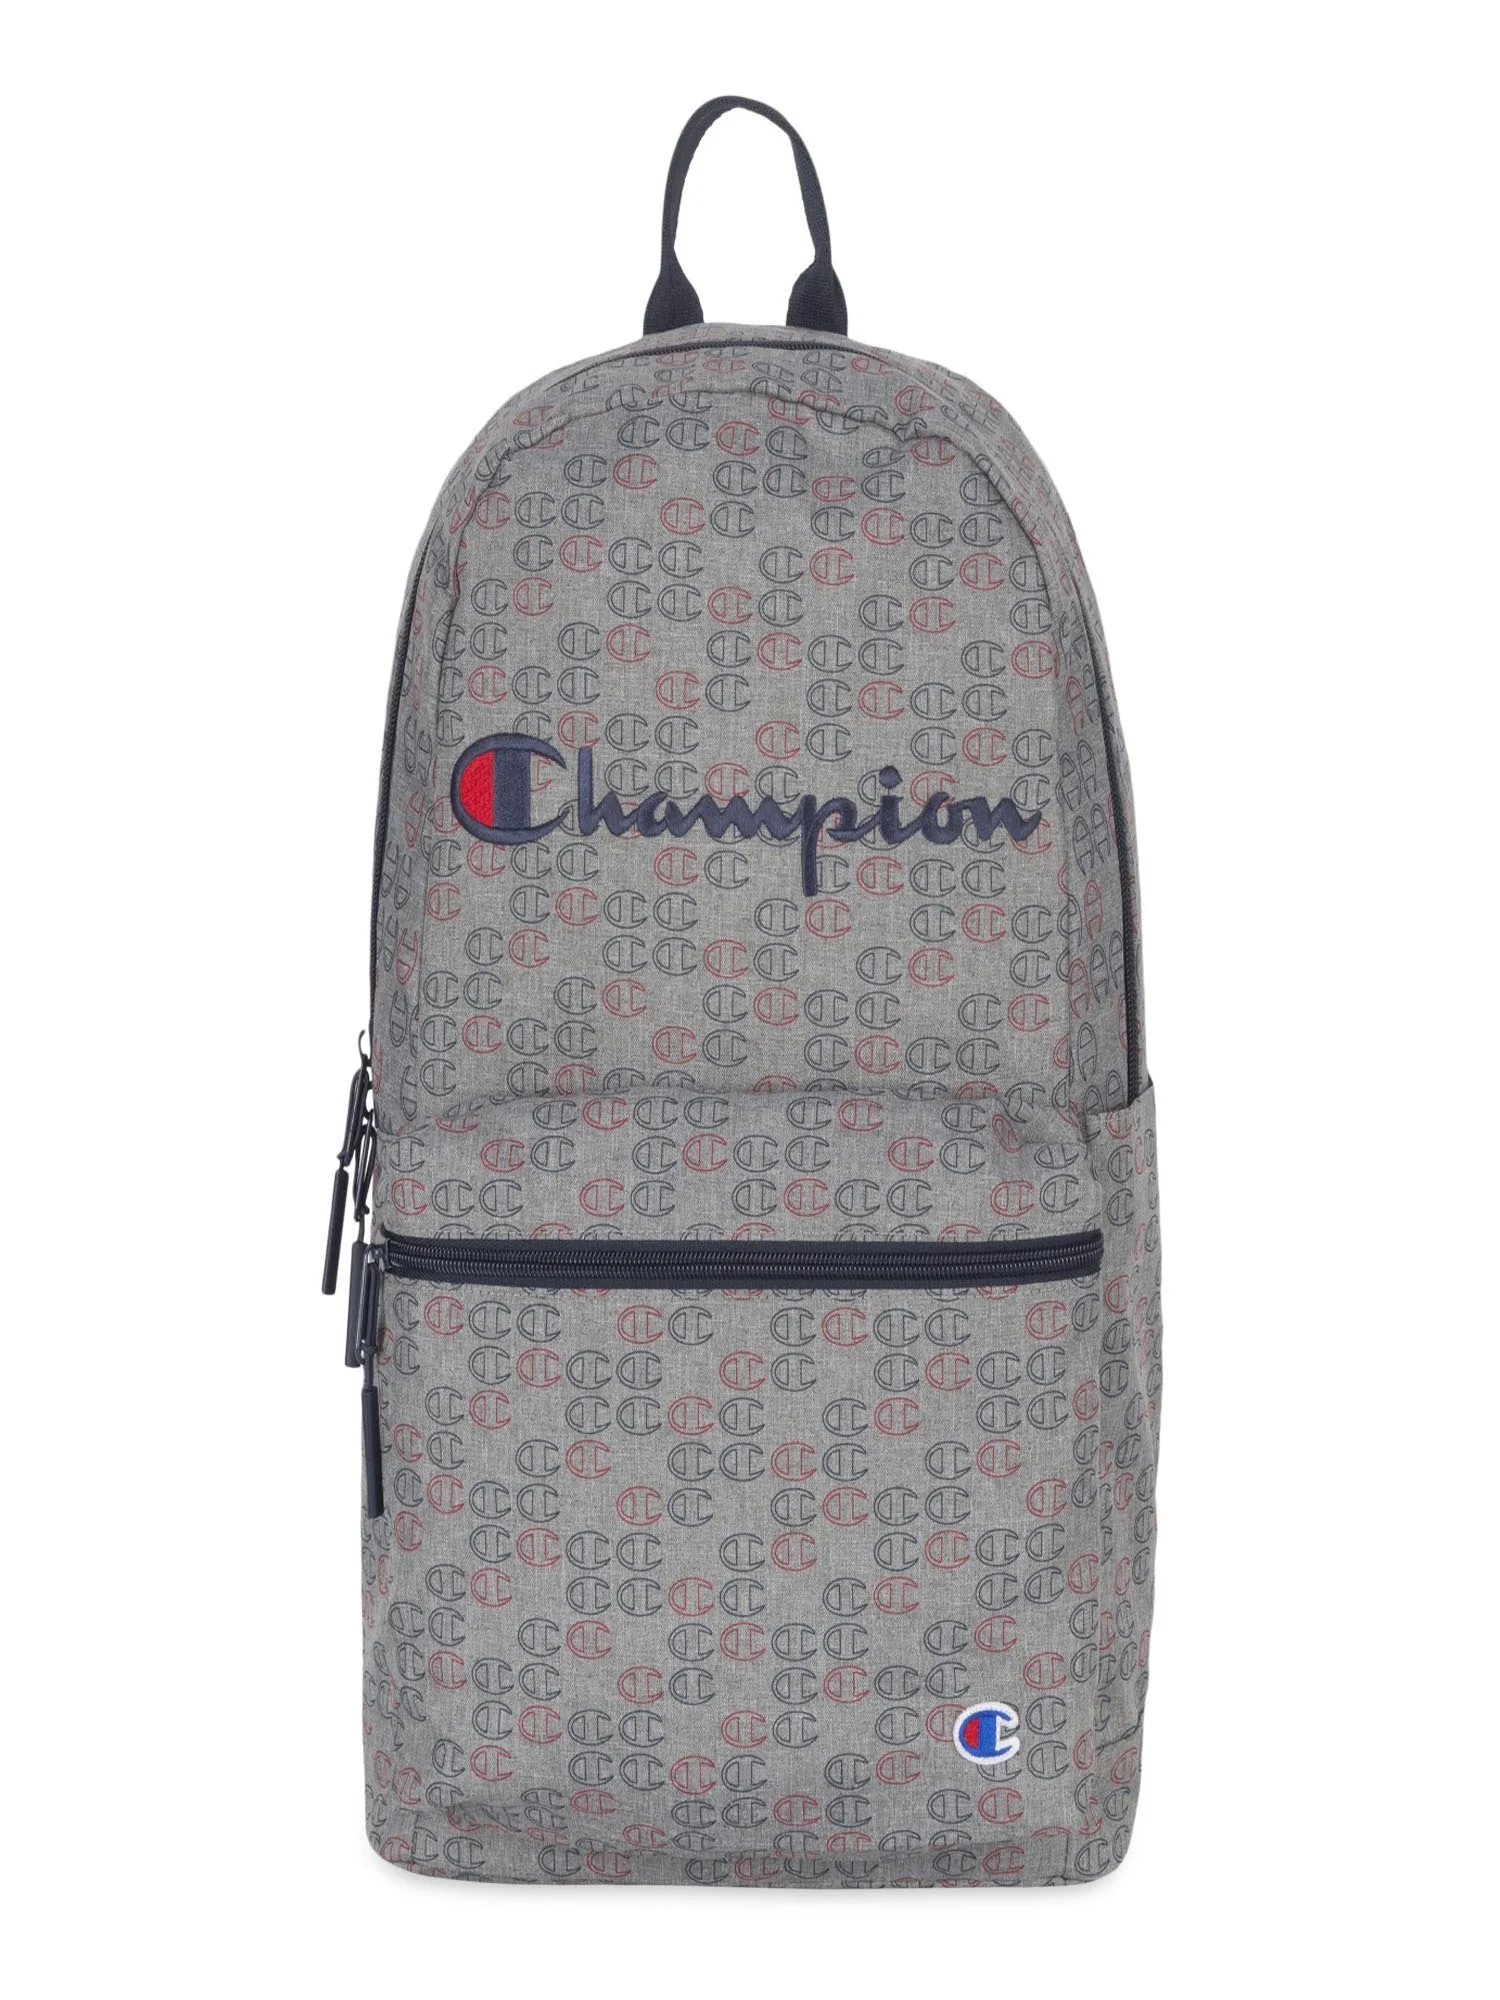 Champion Unisex Adult Asher Backpack Grey Navy